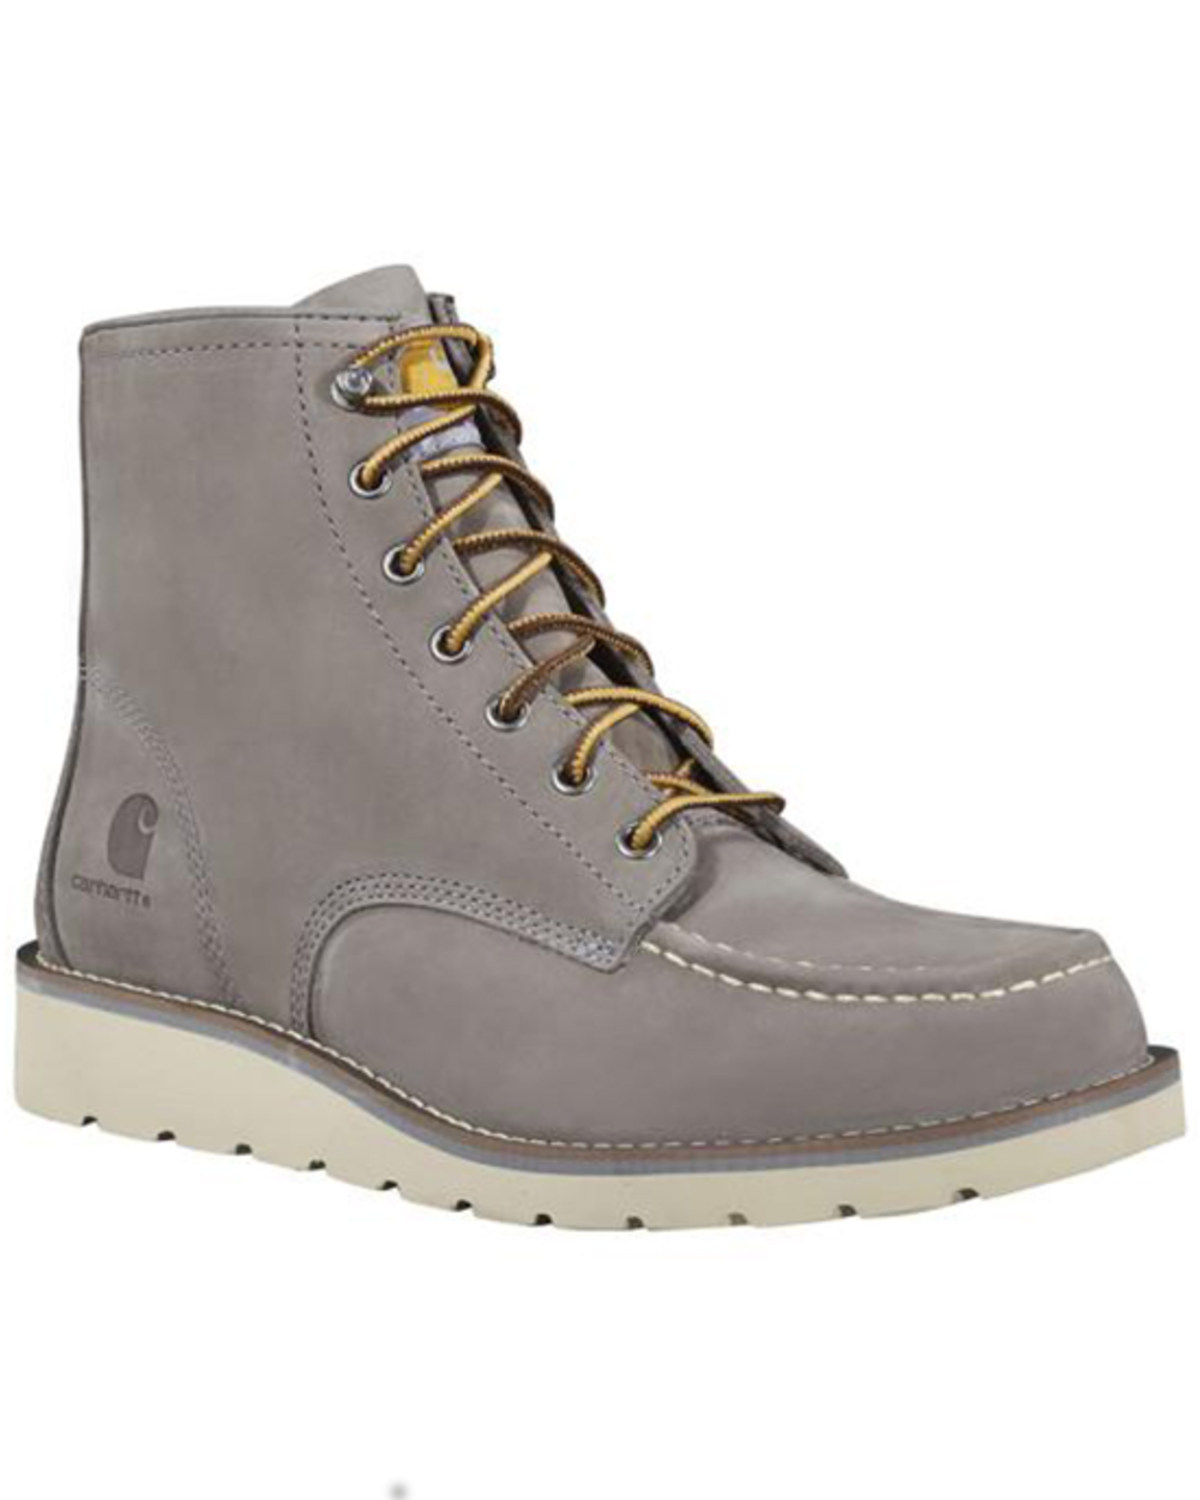 Carhartt Men's 6" Wedge Work Boots - Soft Toe